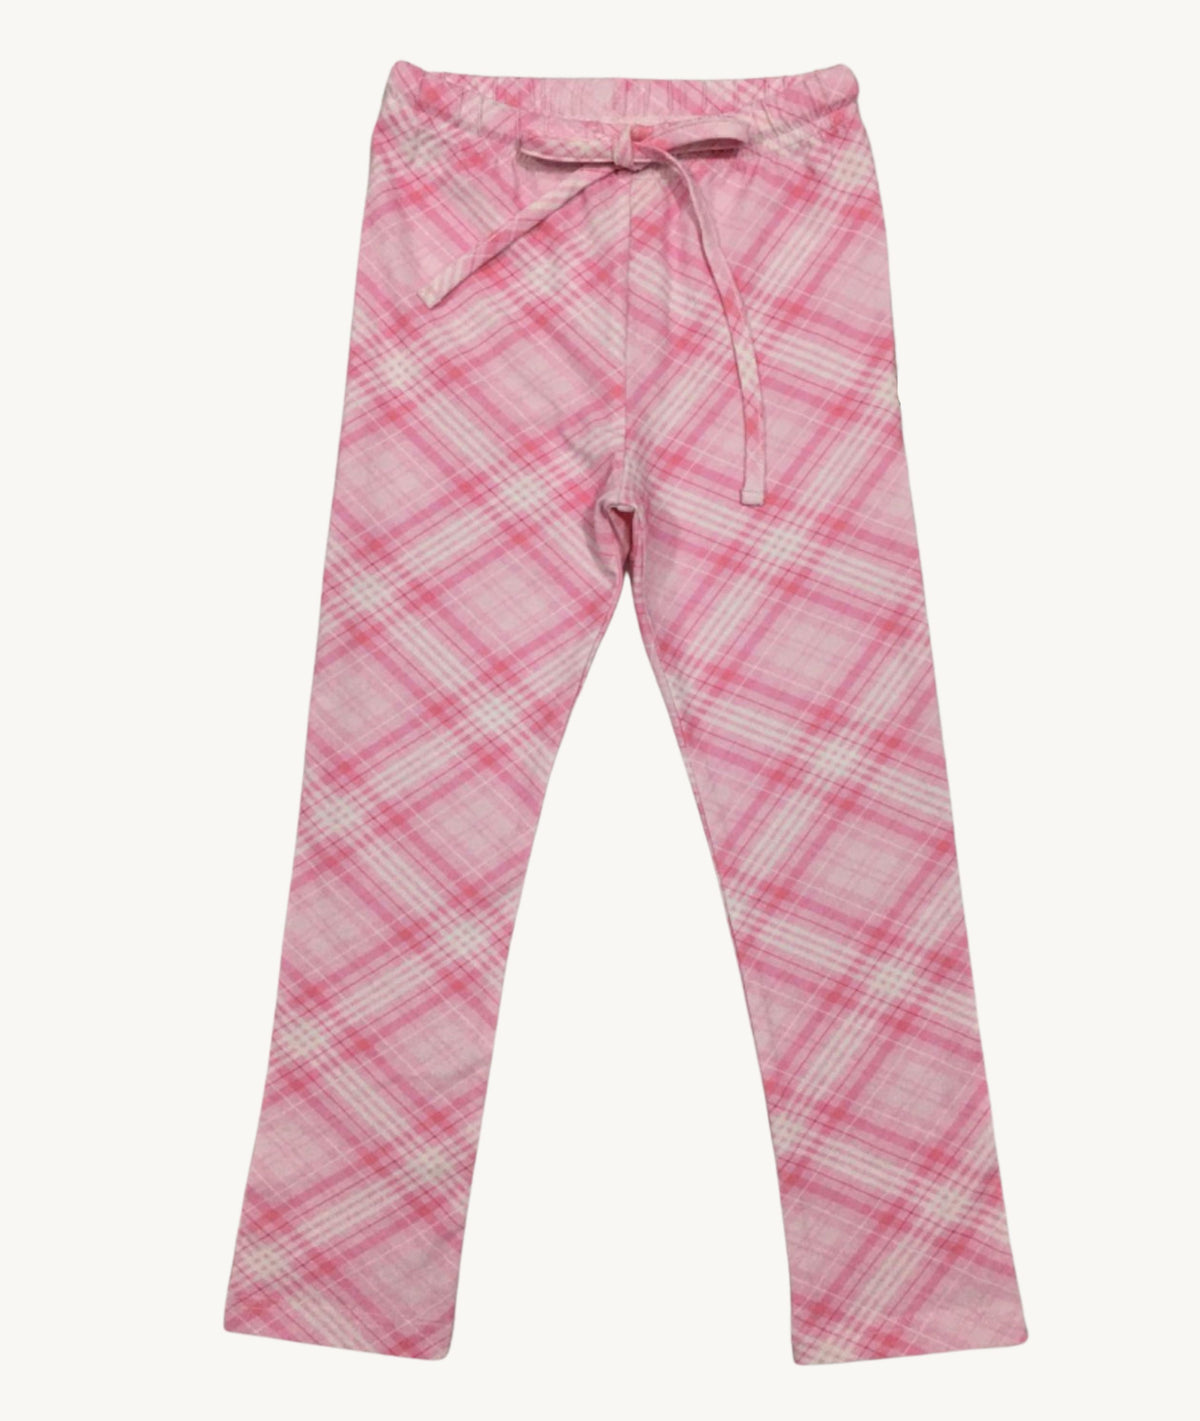 Hot Pink Plaid Knit Leggings